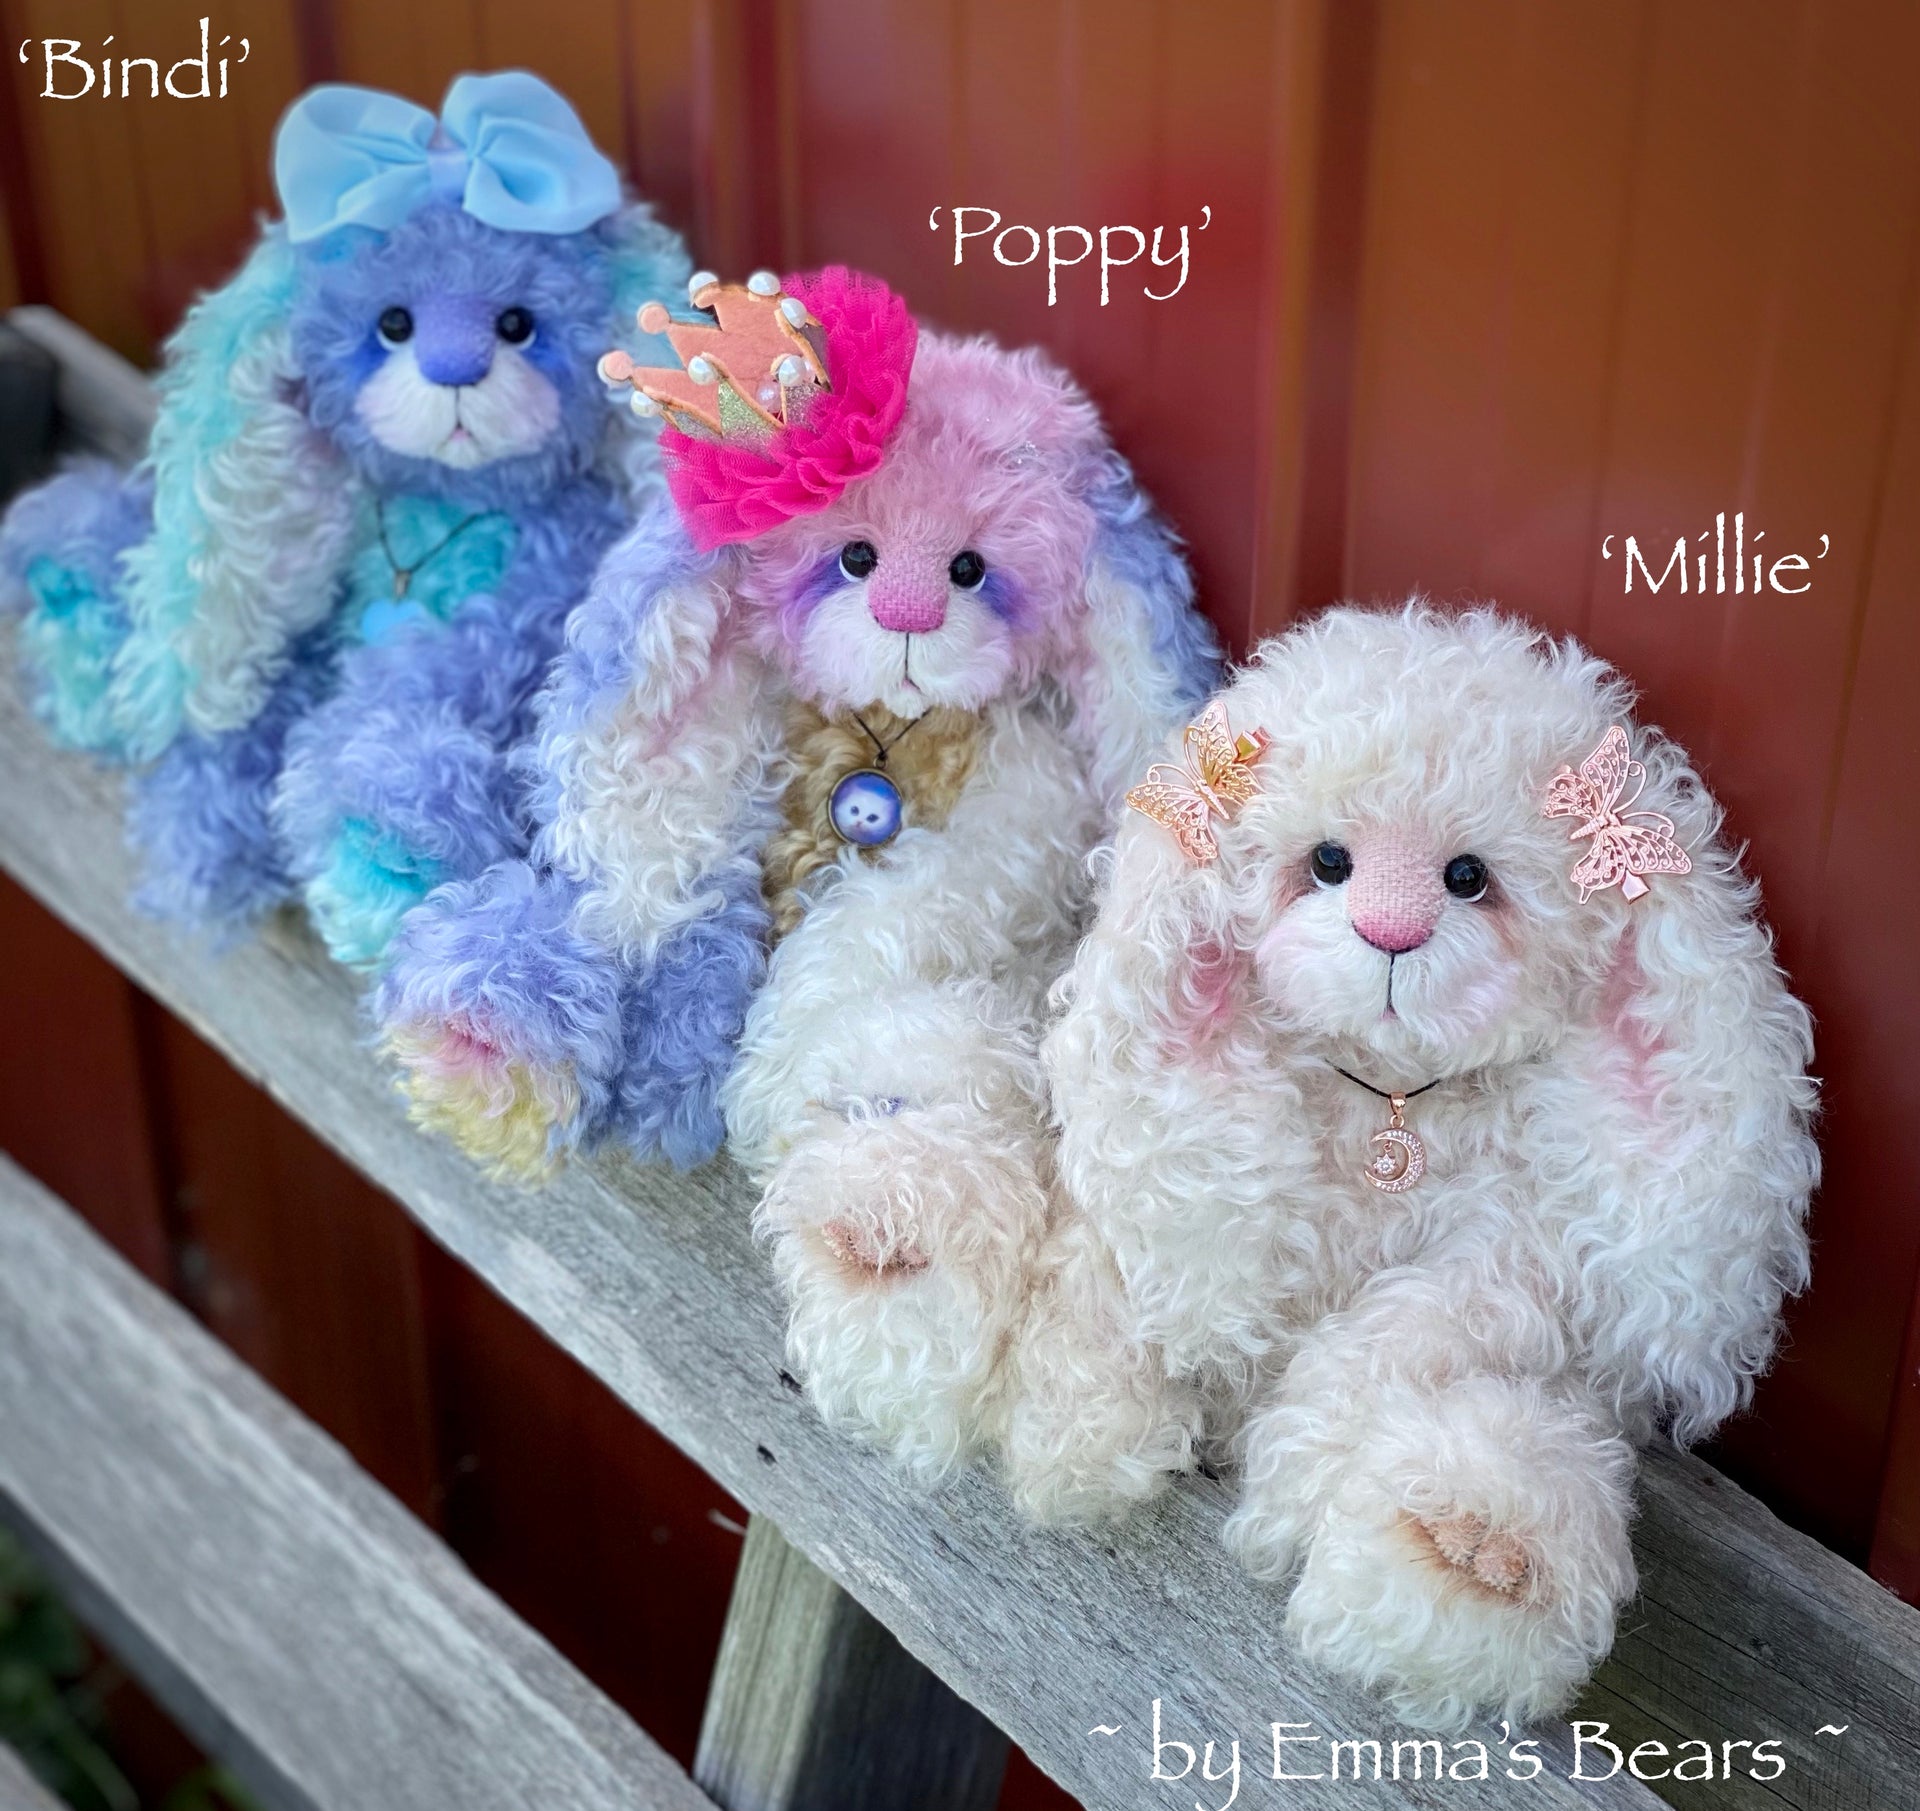 Bindi - 12" Hand-Dyed Kid Mohair Bunny by Emma's Bears - OOAK